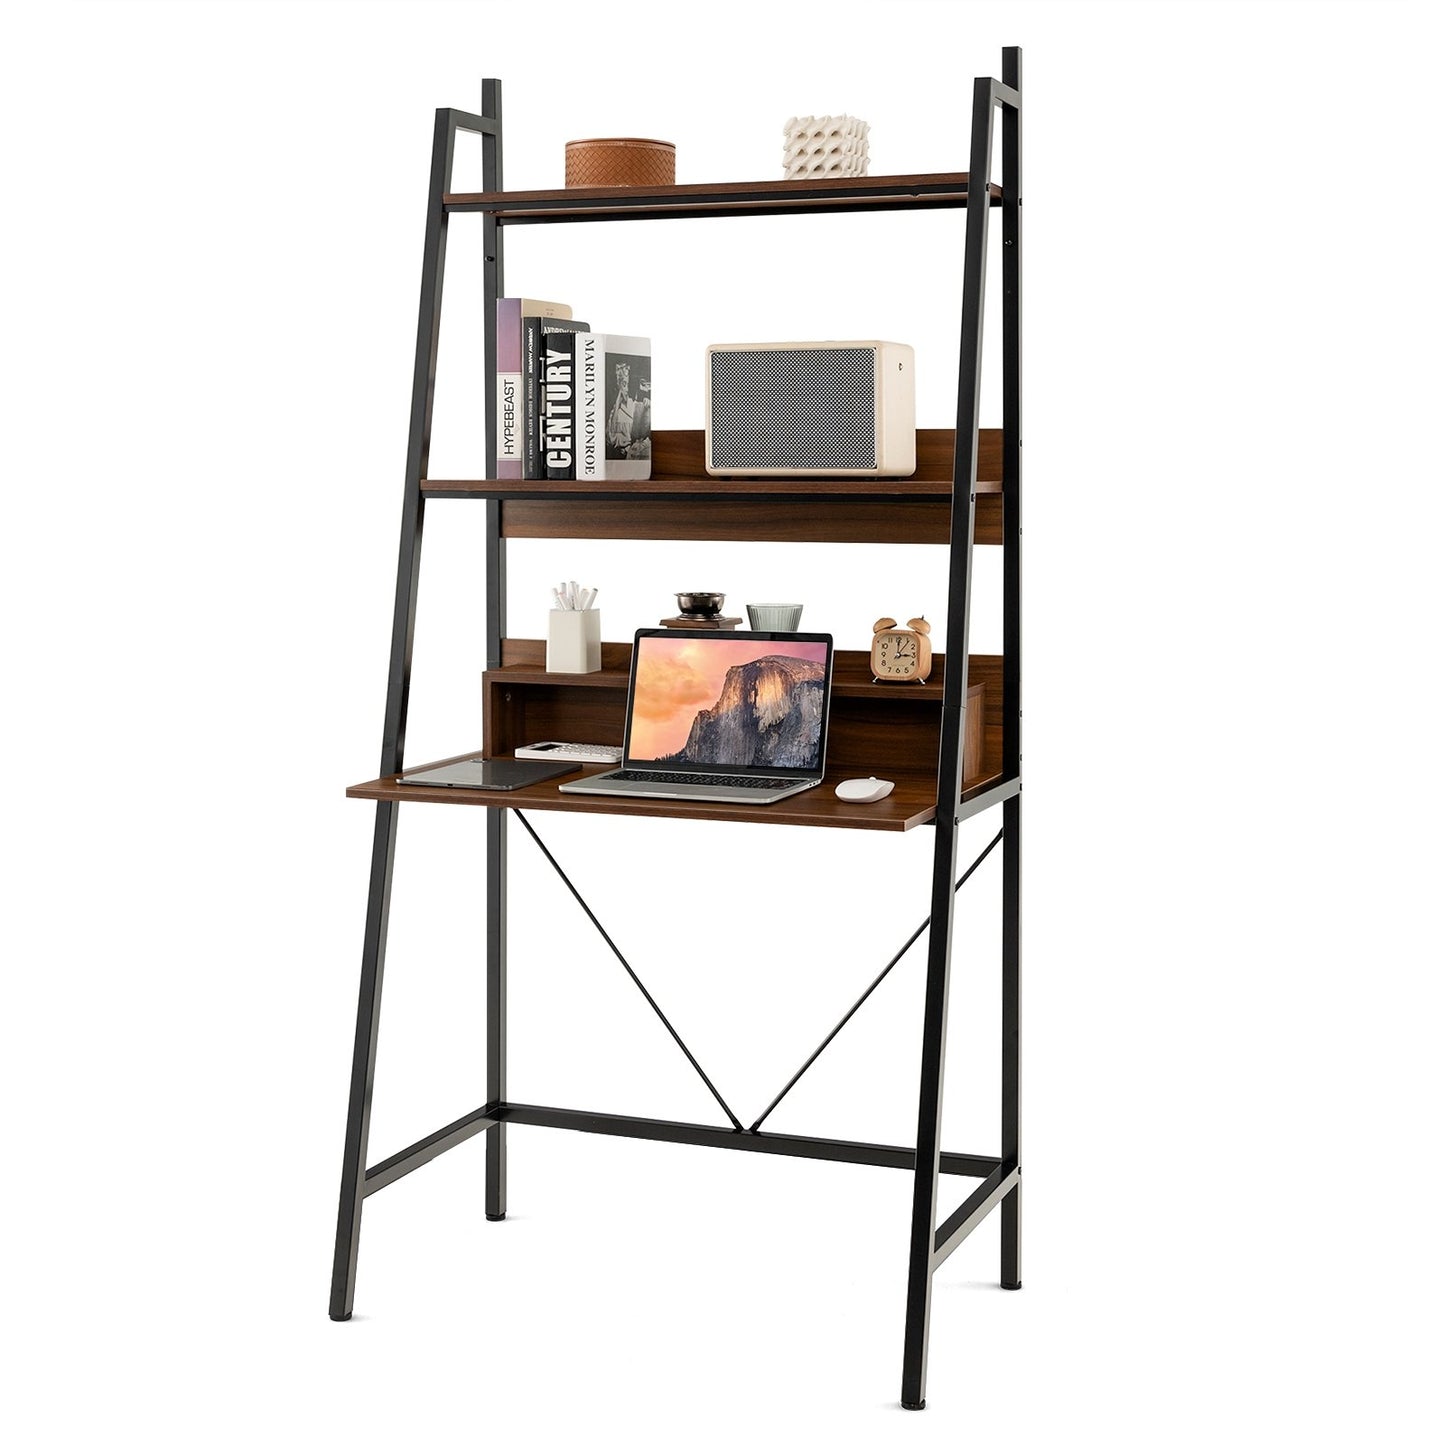 71” High Freestanding Laptop Desk with Open Shelves for Living Room Bedroom Study, Brown